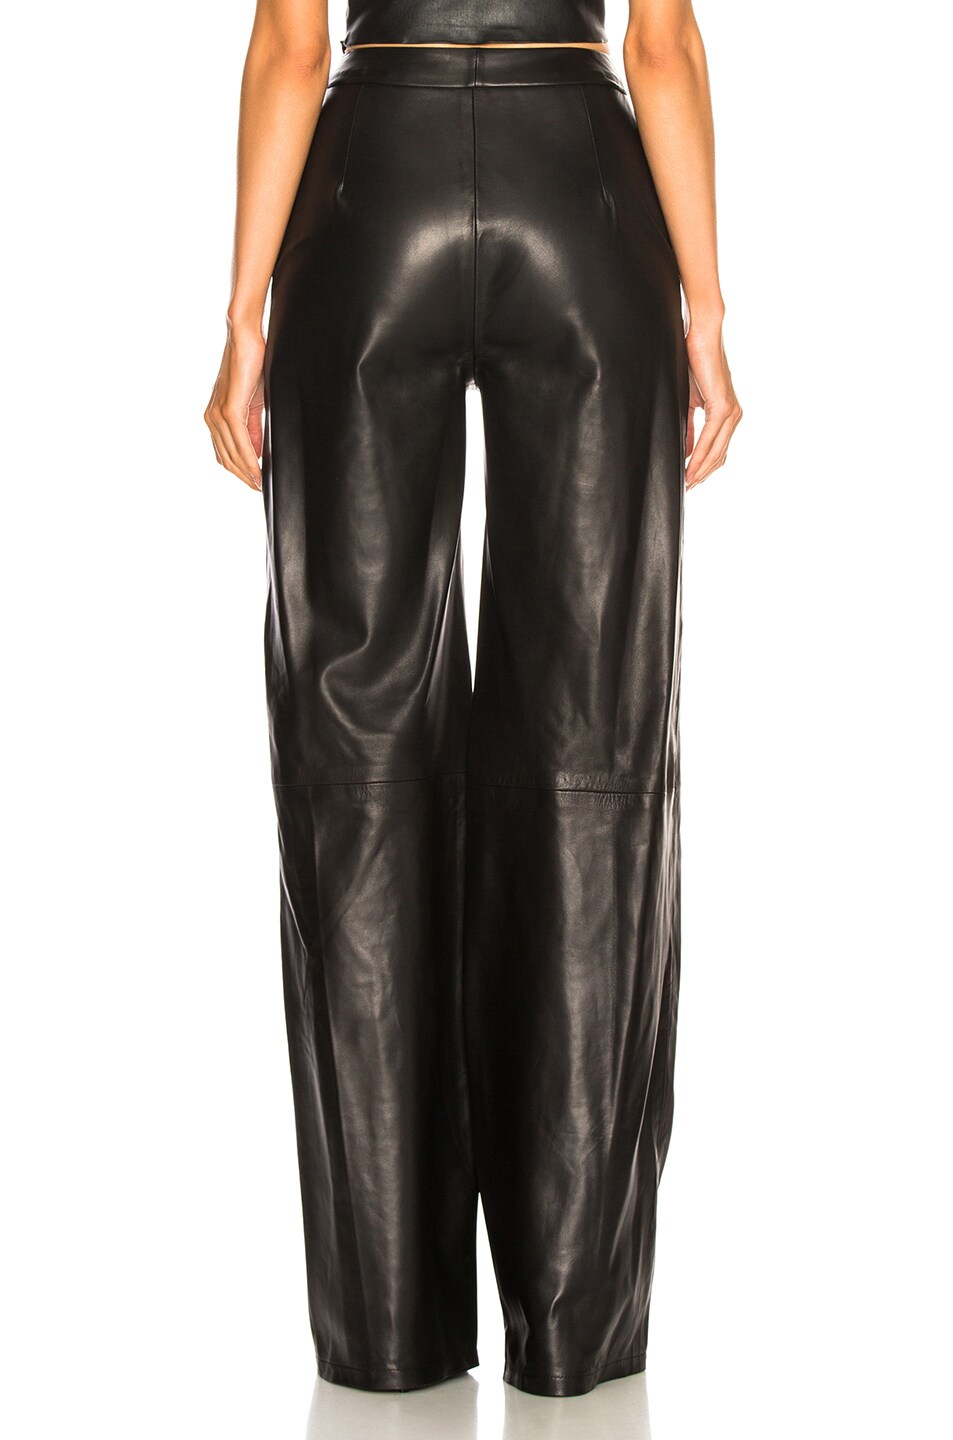 SABLYN Josephine Wide Leg Leather Pants in Black | FWRD